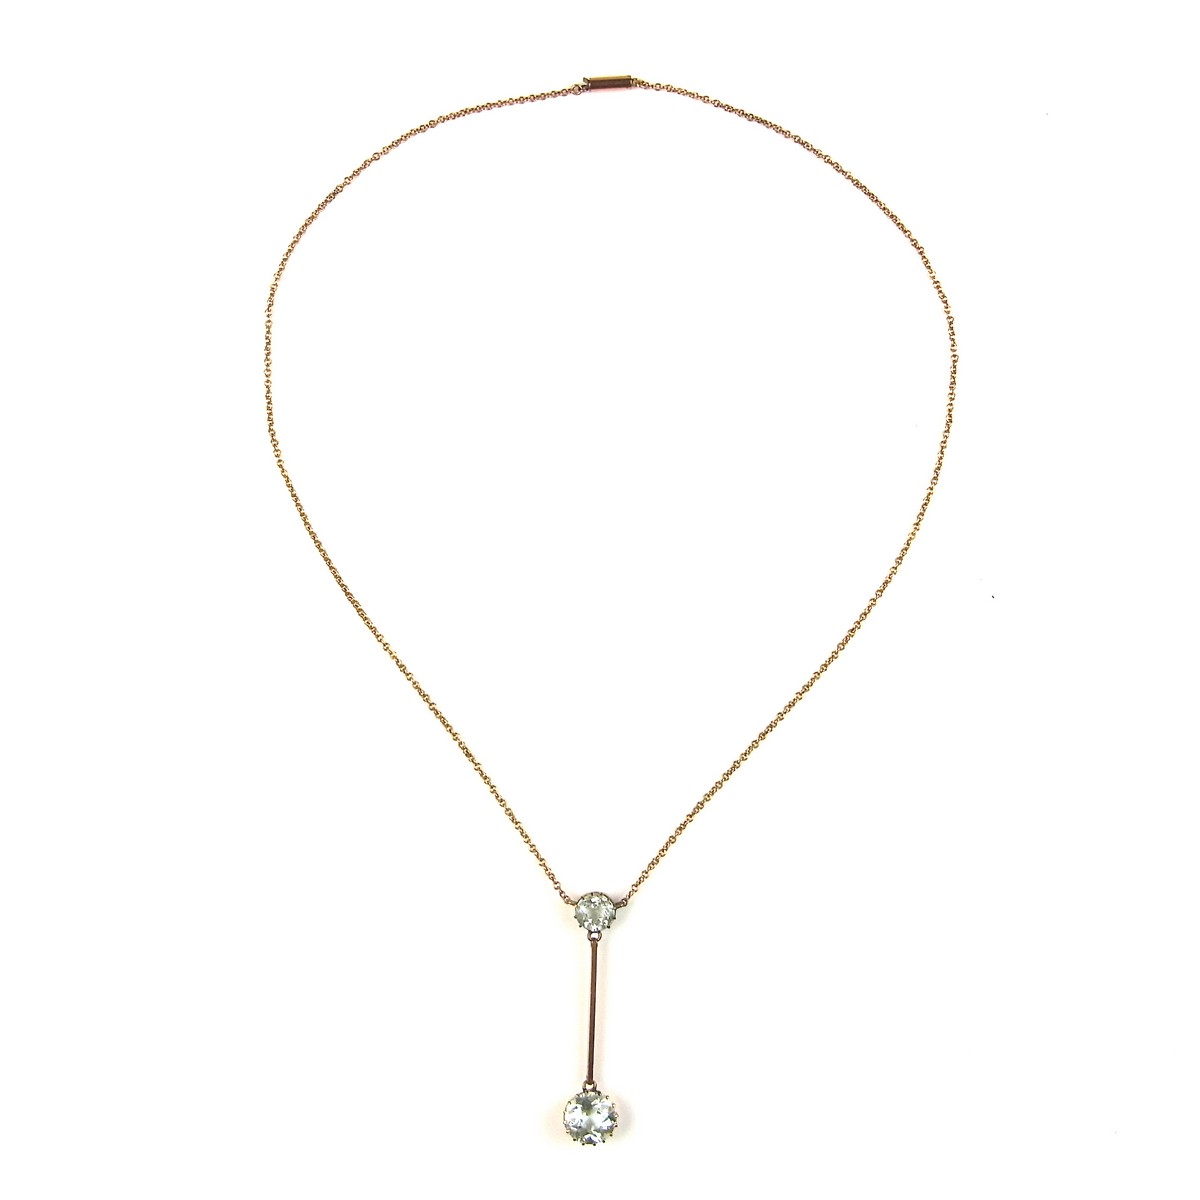 9 ct rose gold aquamarine pendant necklace. - Image 2 of 2